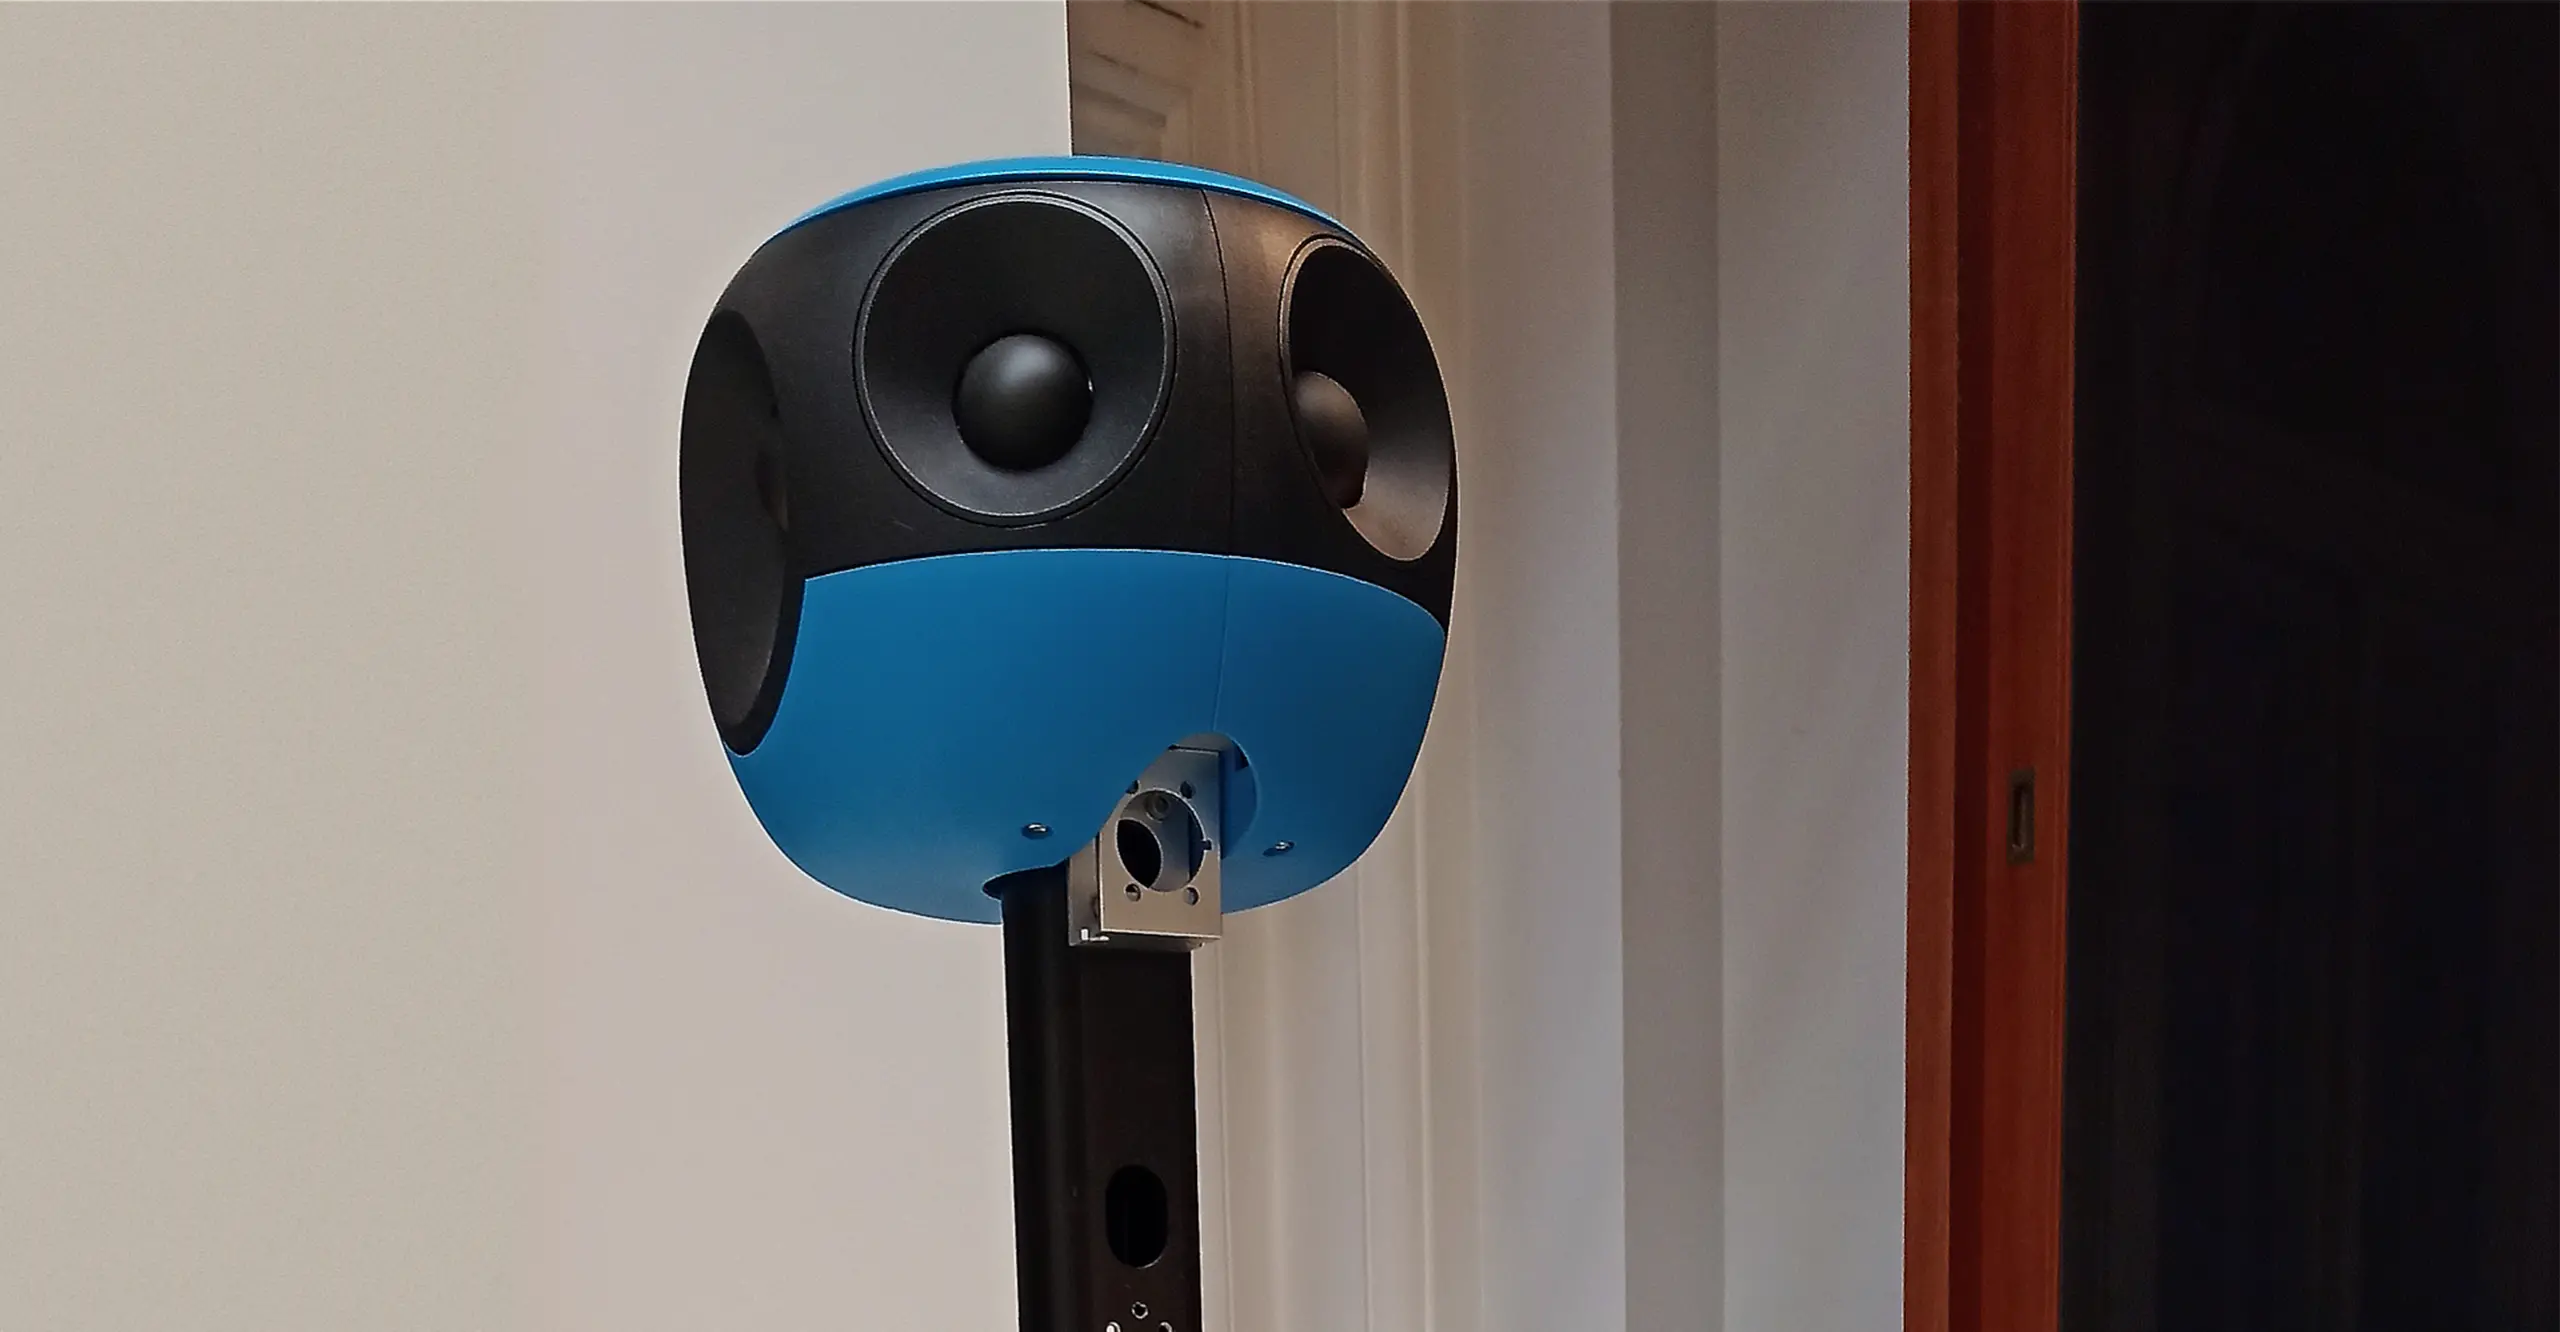 The camera-face of a google maps robot